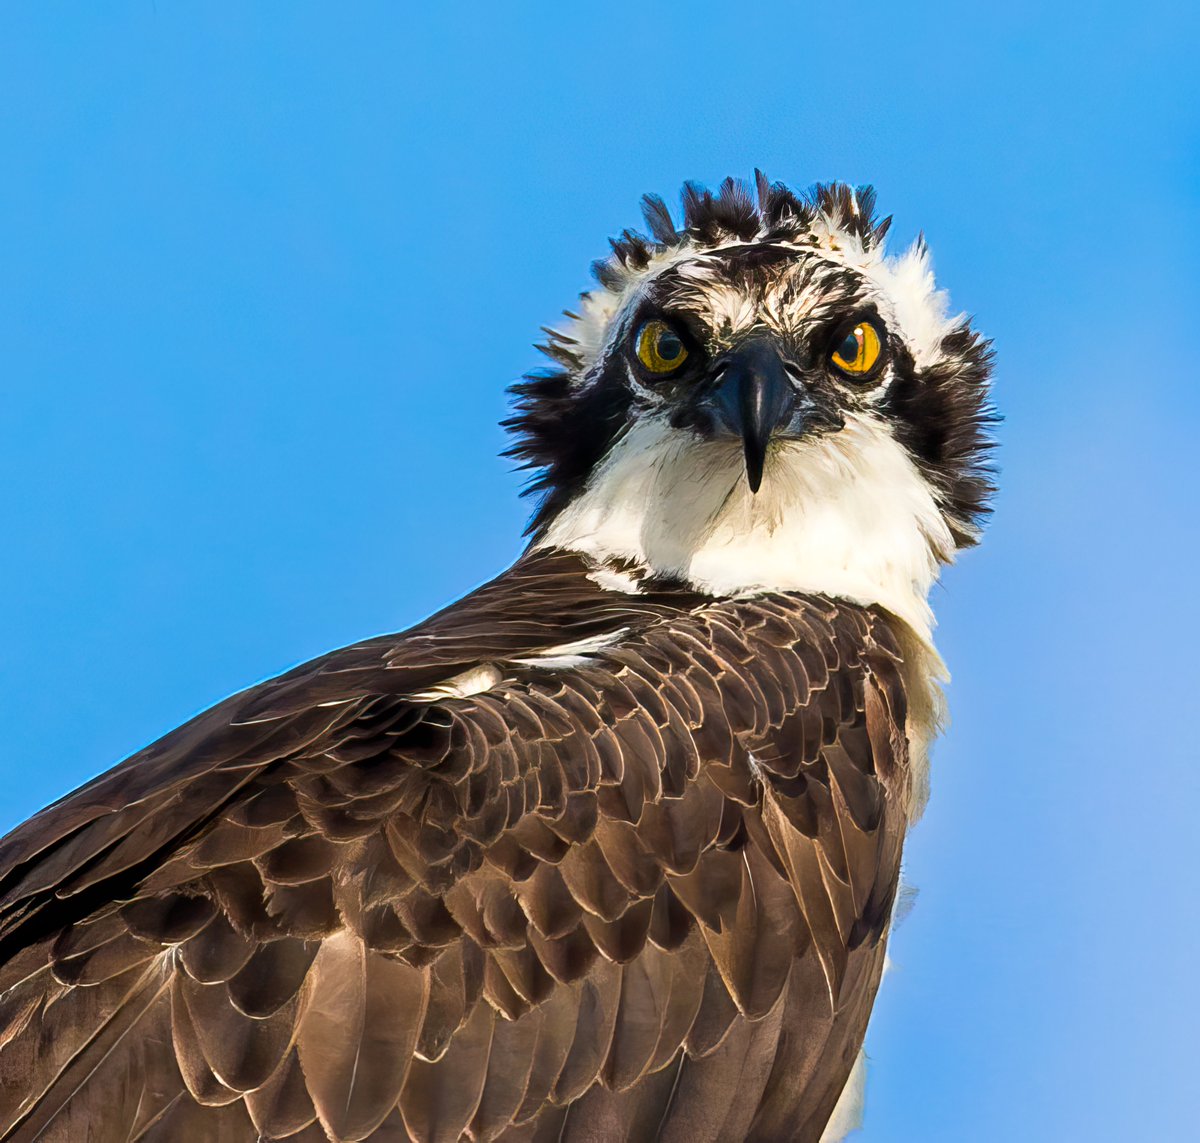 I See You

The keen vision of the osprey

 #wildlife #wildlifephotography #birds #birdphotography #photooftheday